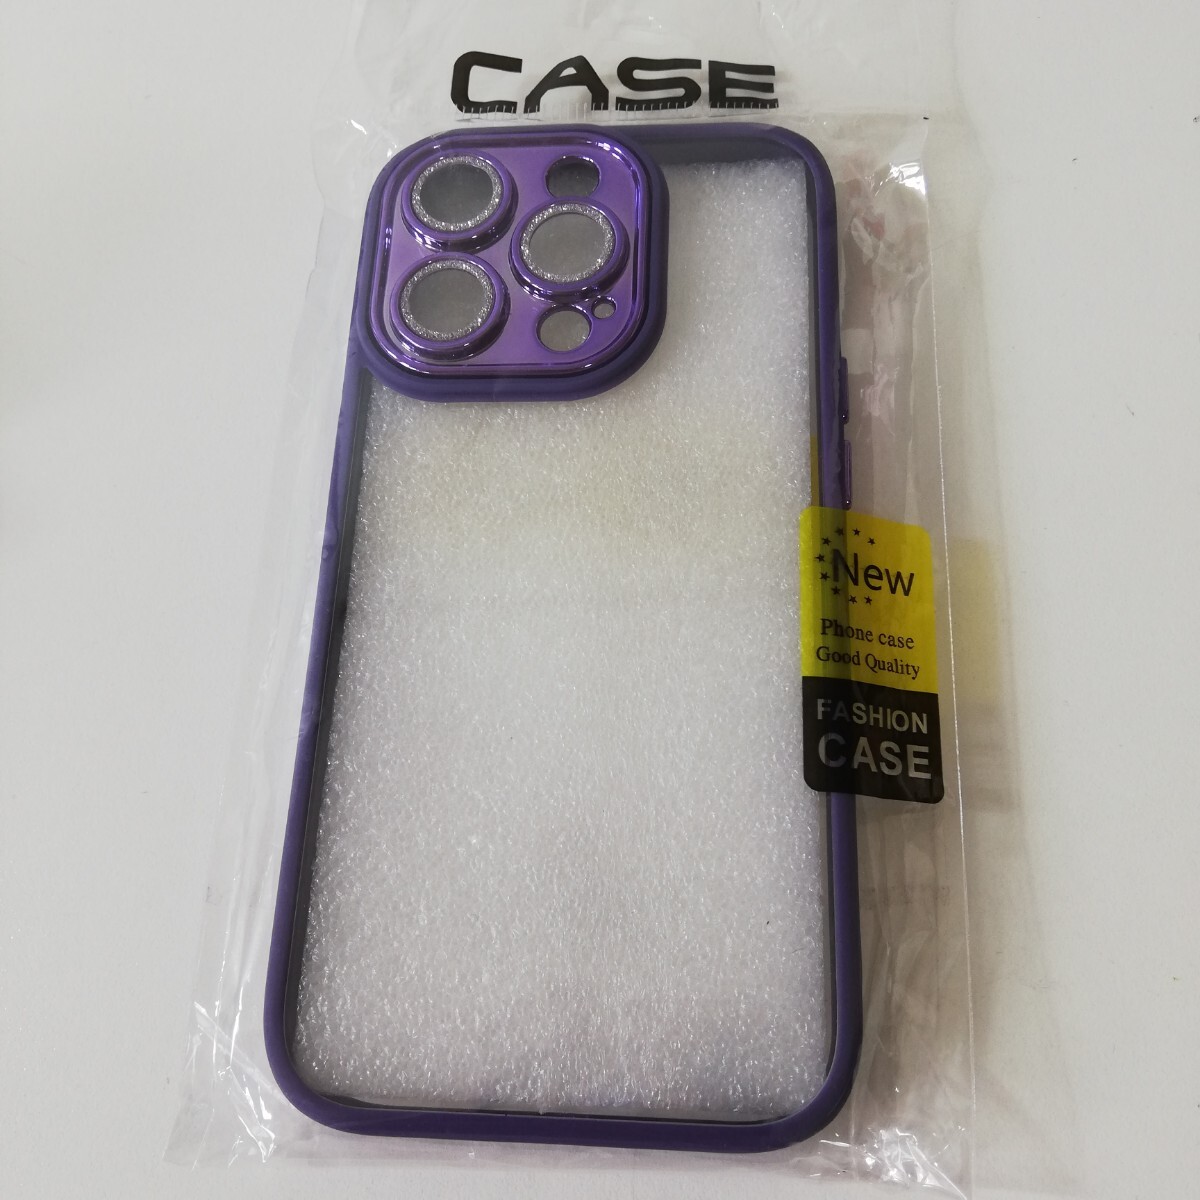 FASHION CASE iPhone ケース 紫 パープル ラメ入り 未使用品 _画像1